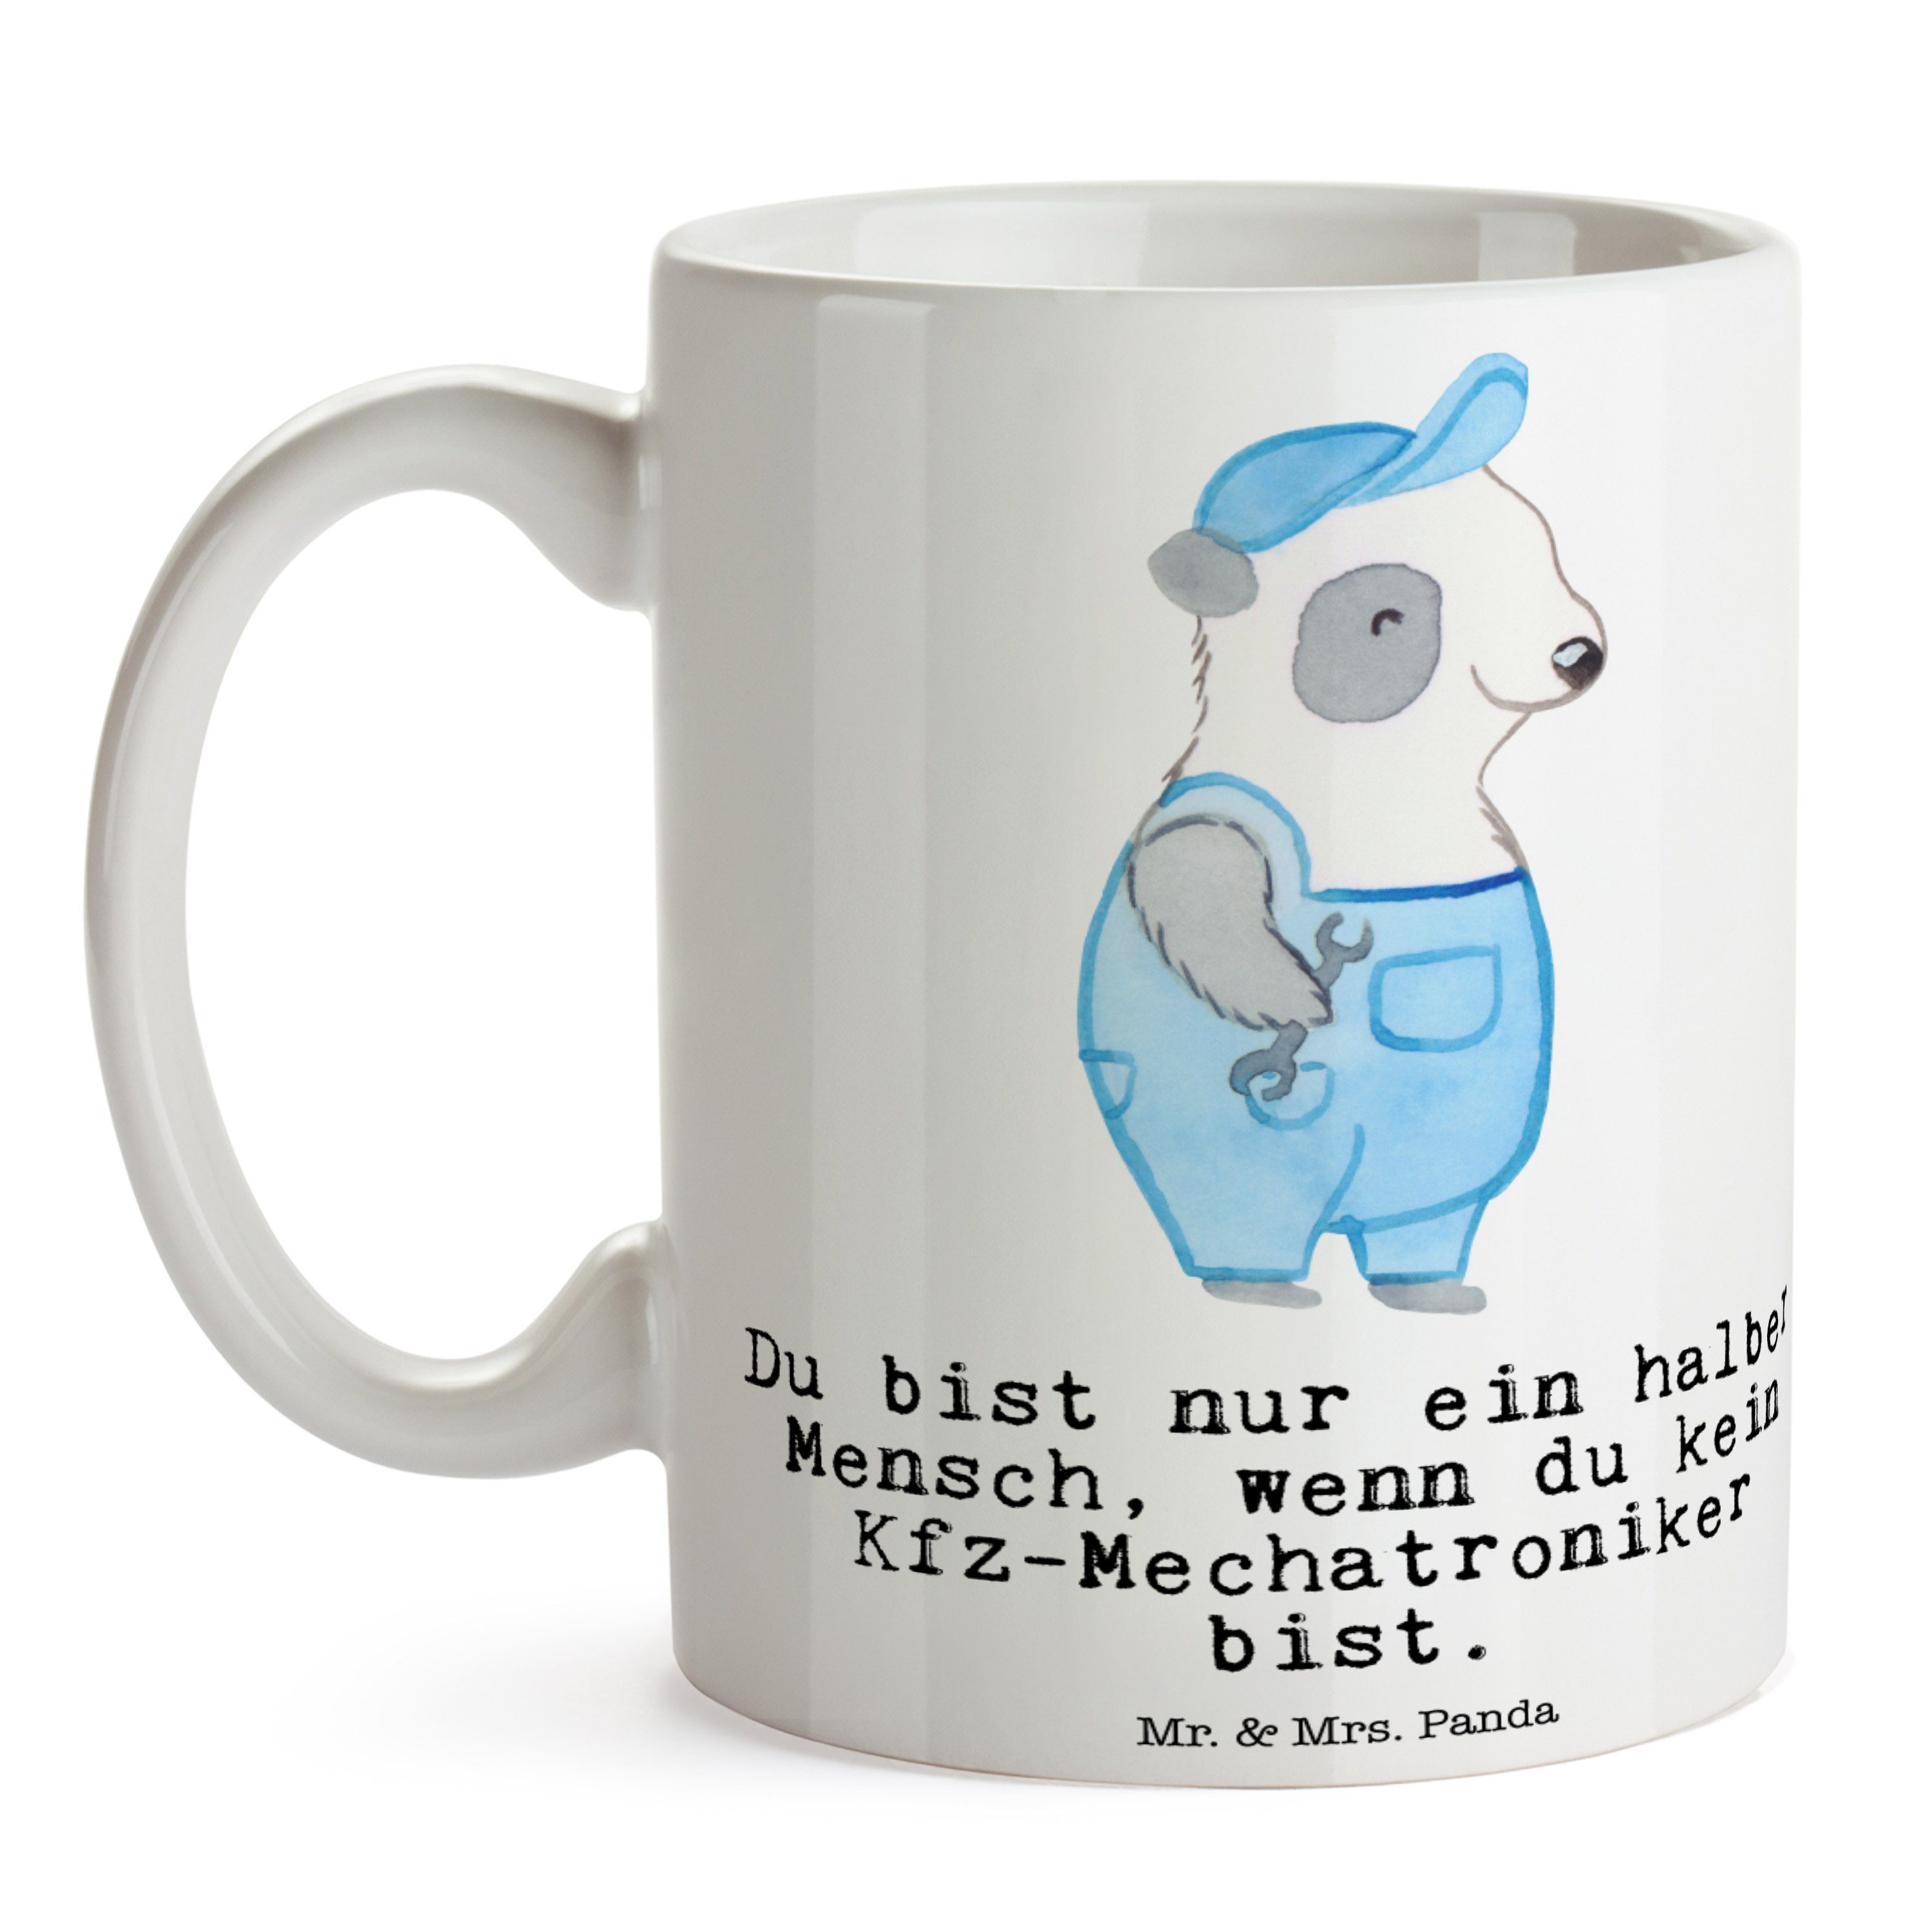 & Mr. Mrs. mit Geschenk, Panda Kraftf, Tasse Herz - Gesellenprüfung, Kfz-Mechatroniker Keramik Weiß -